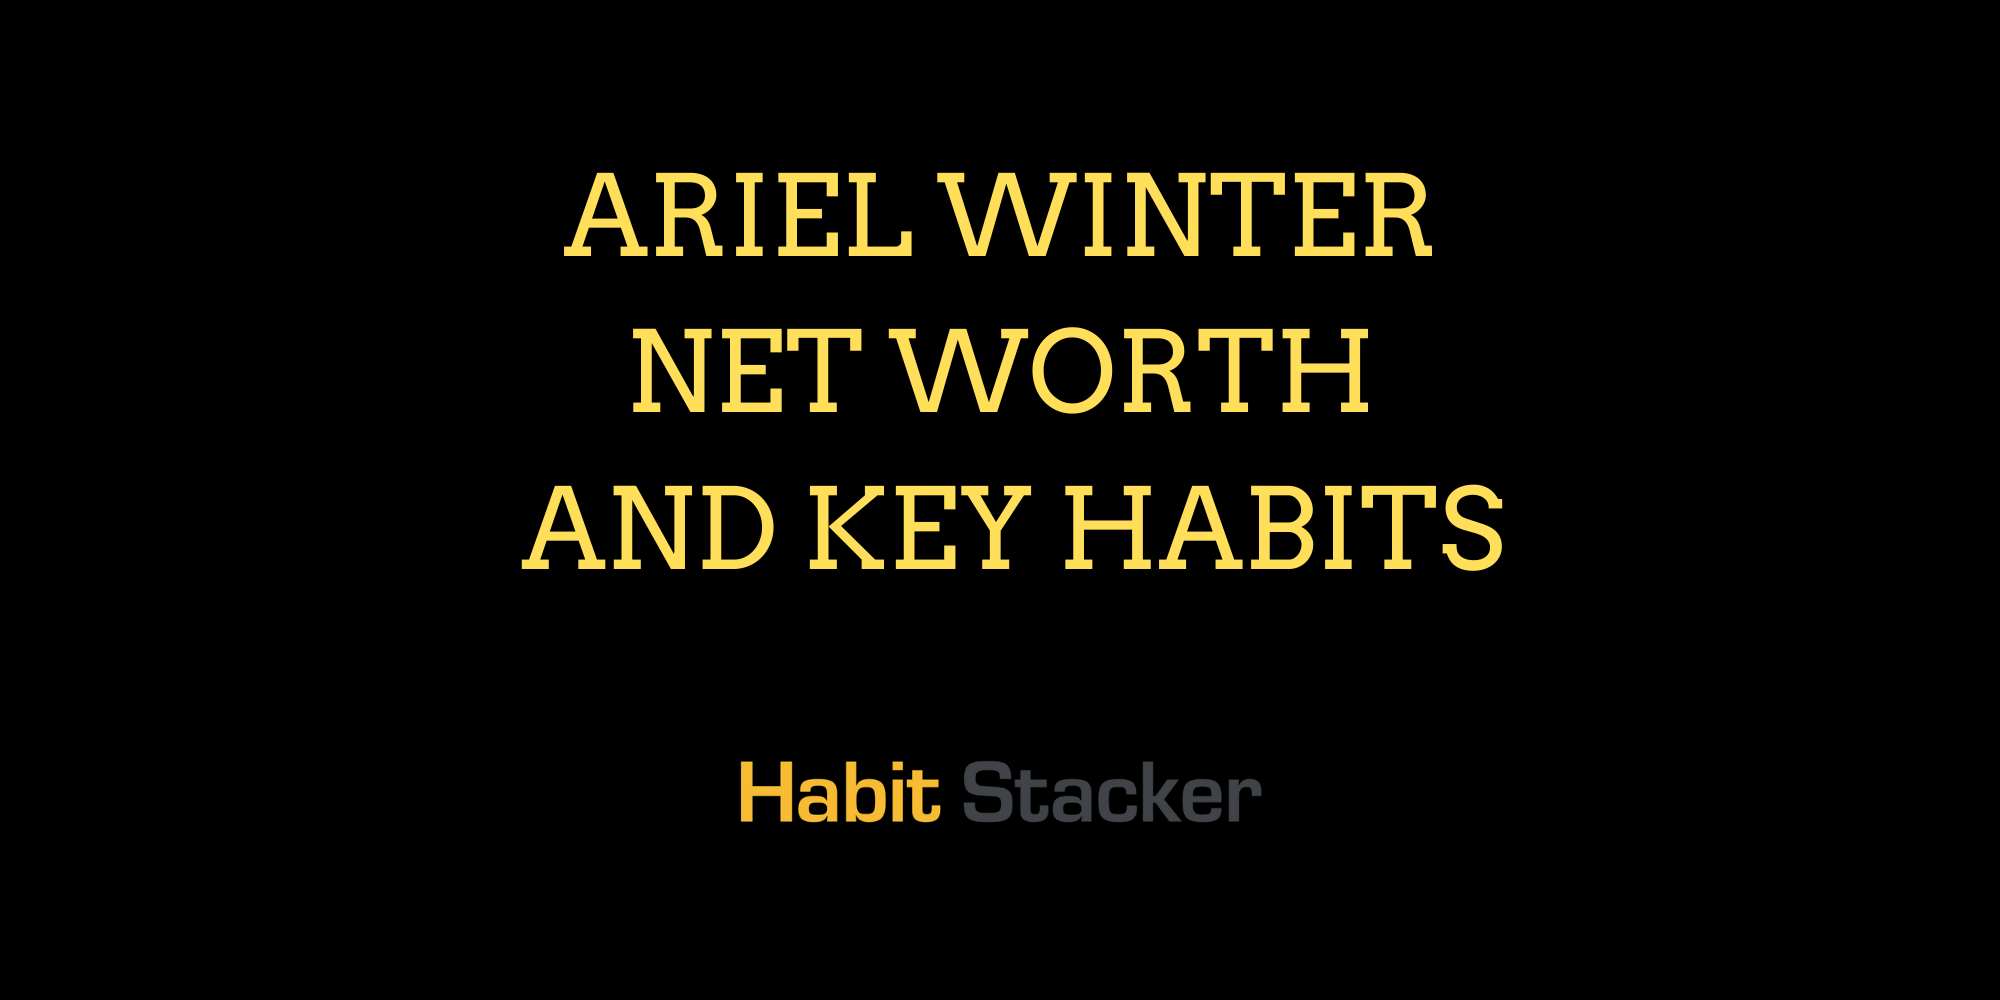 Ariel Winter Net Worth And Key Habits